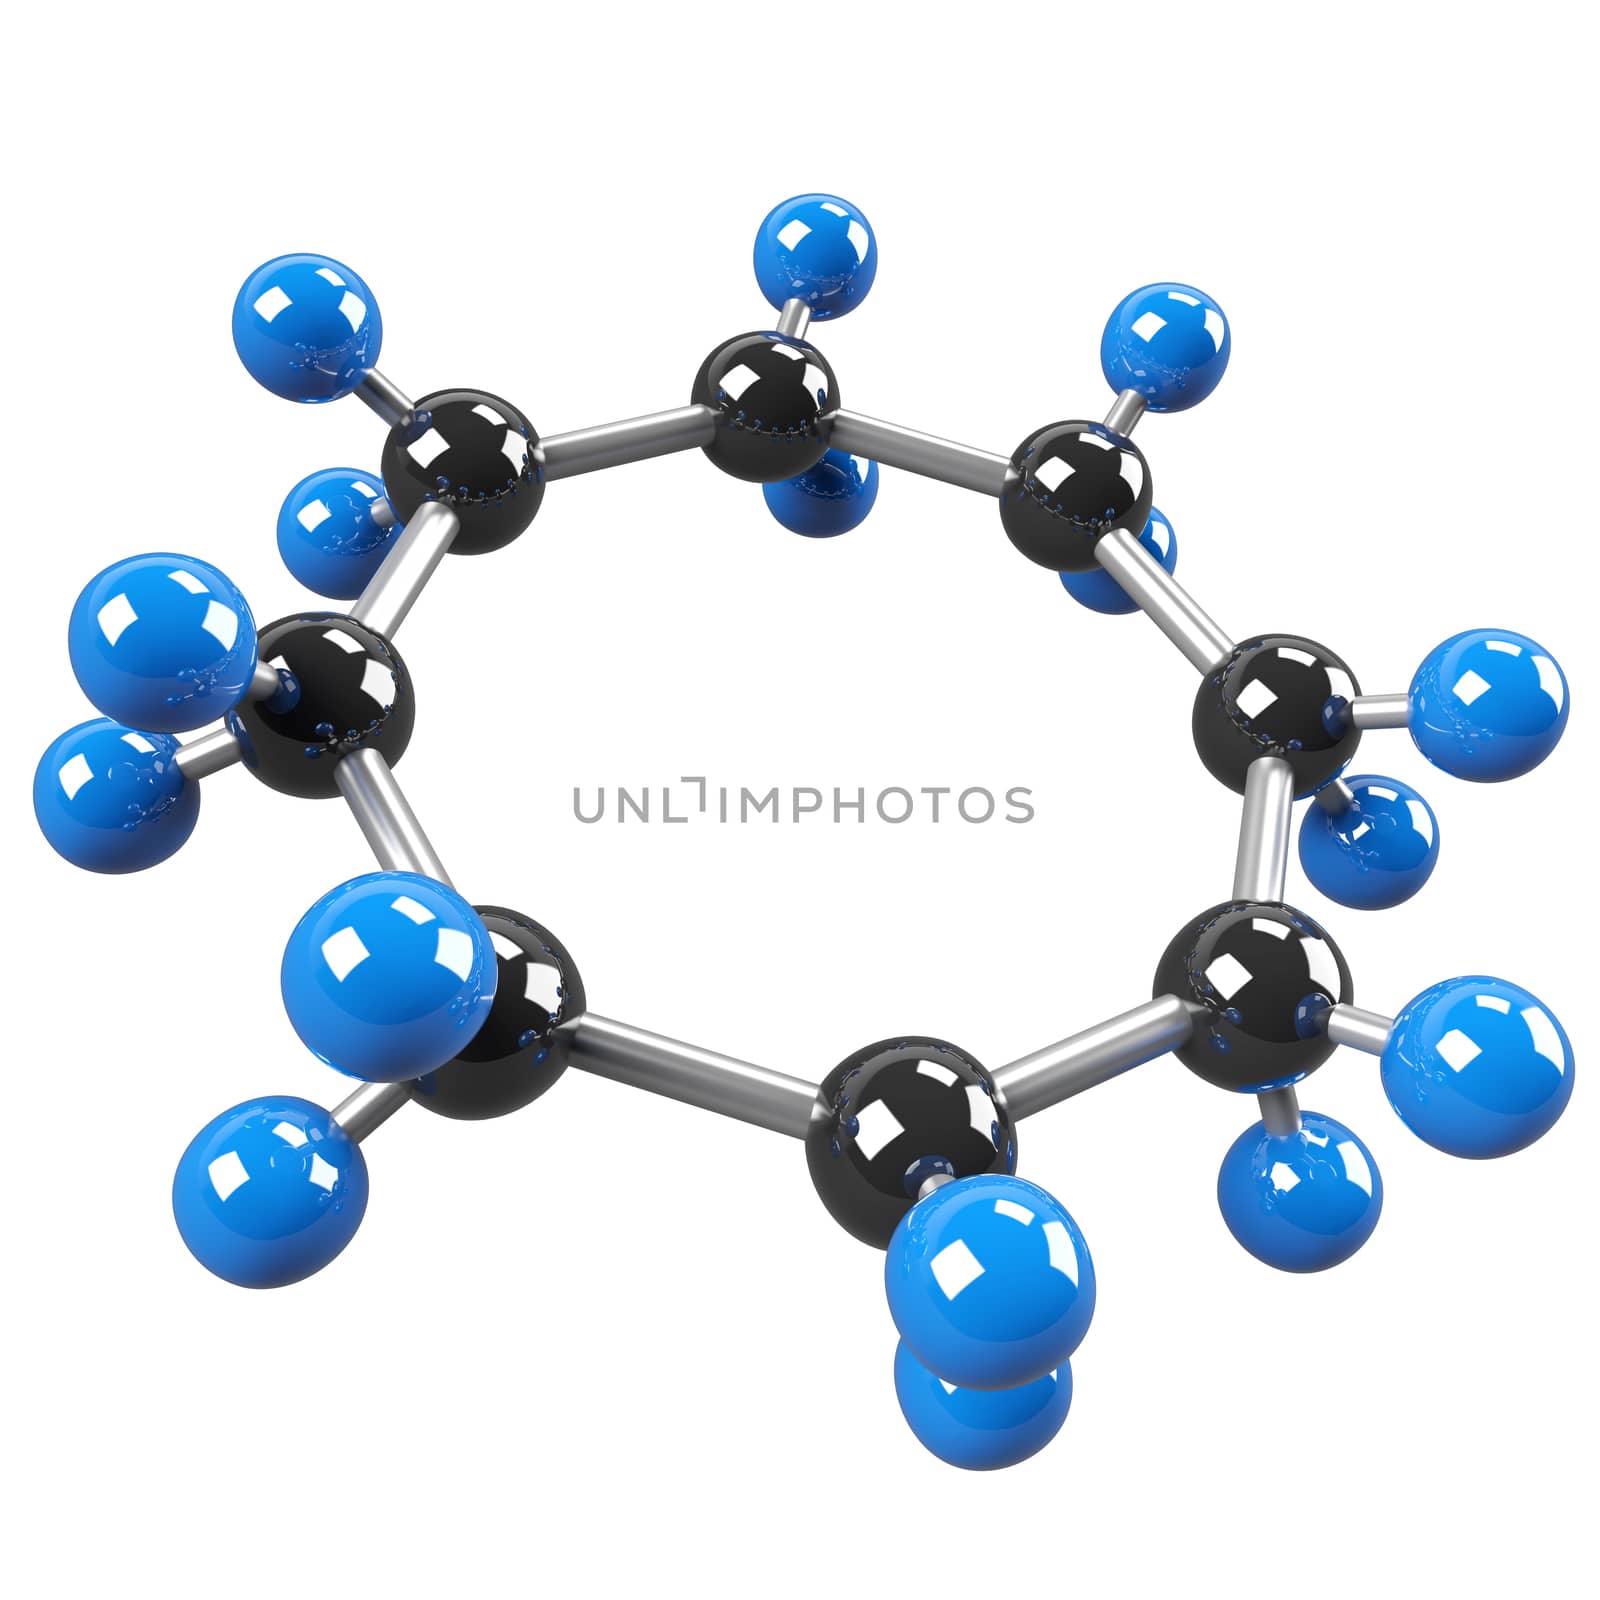 Molecule by don_vladimir